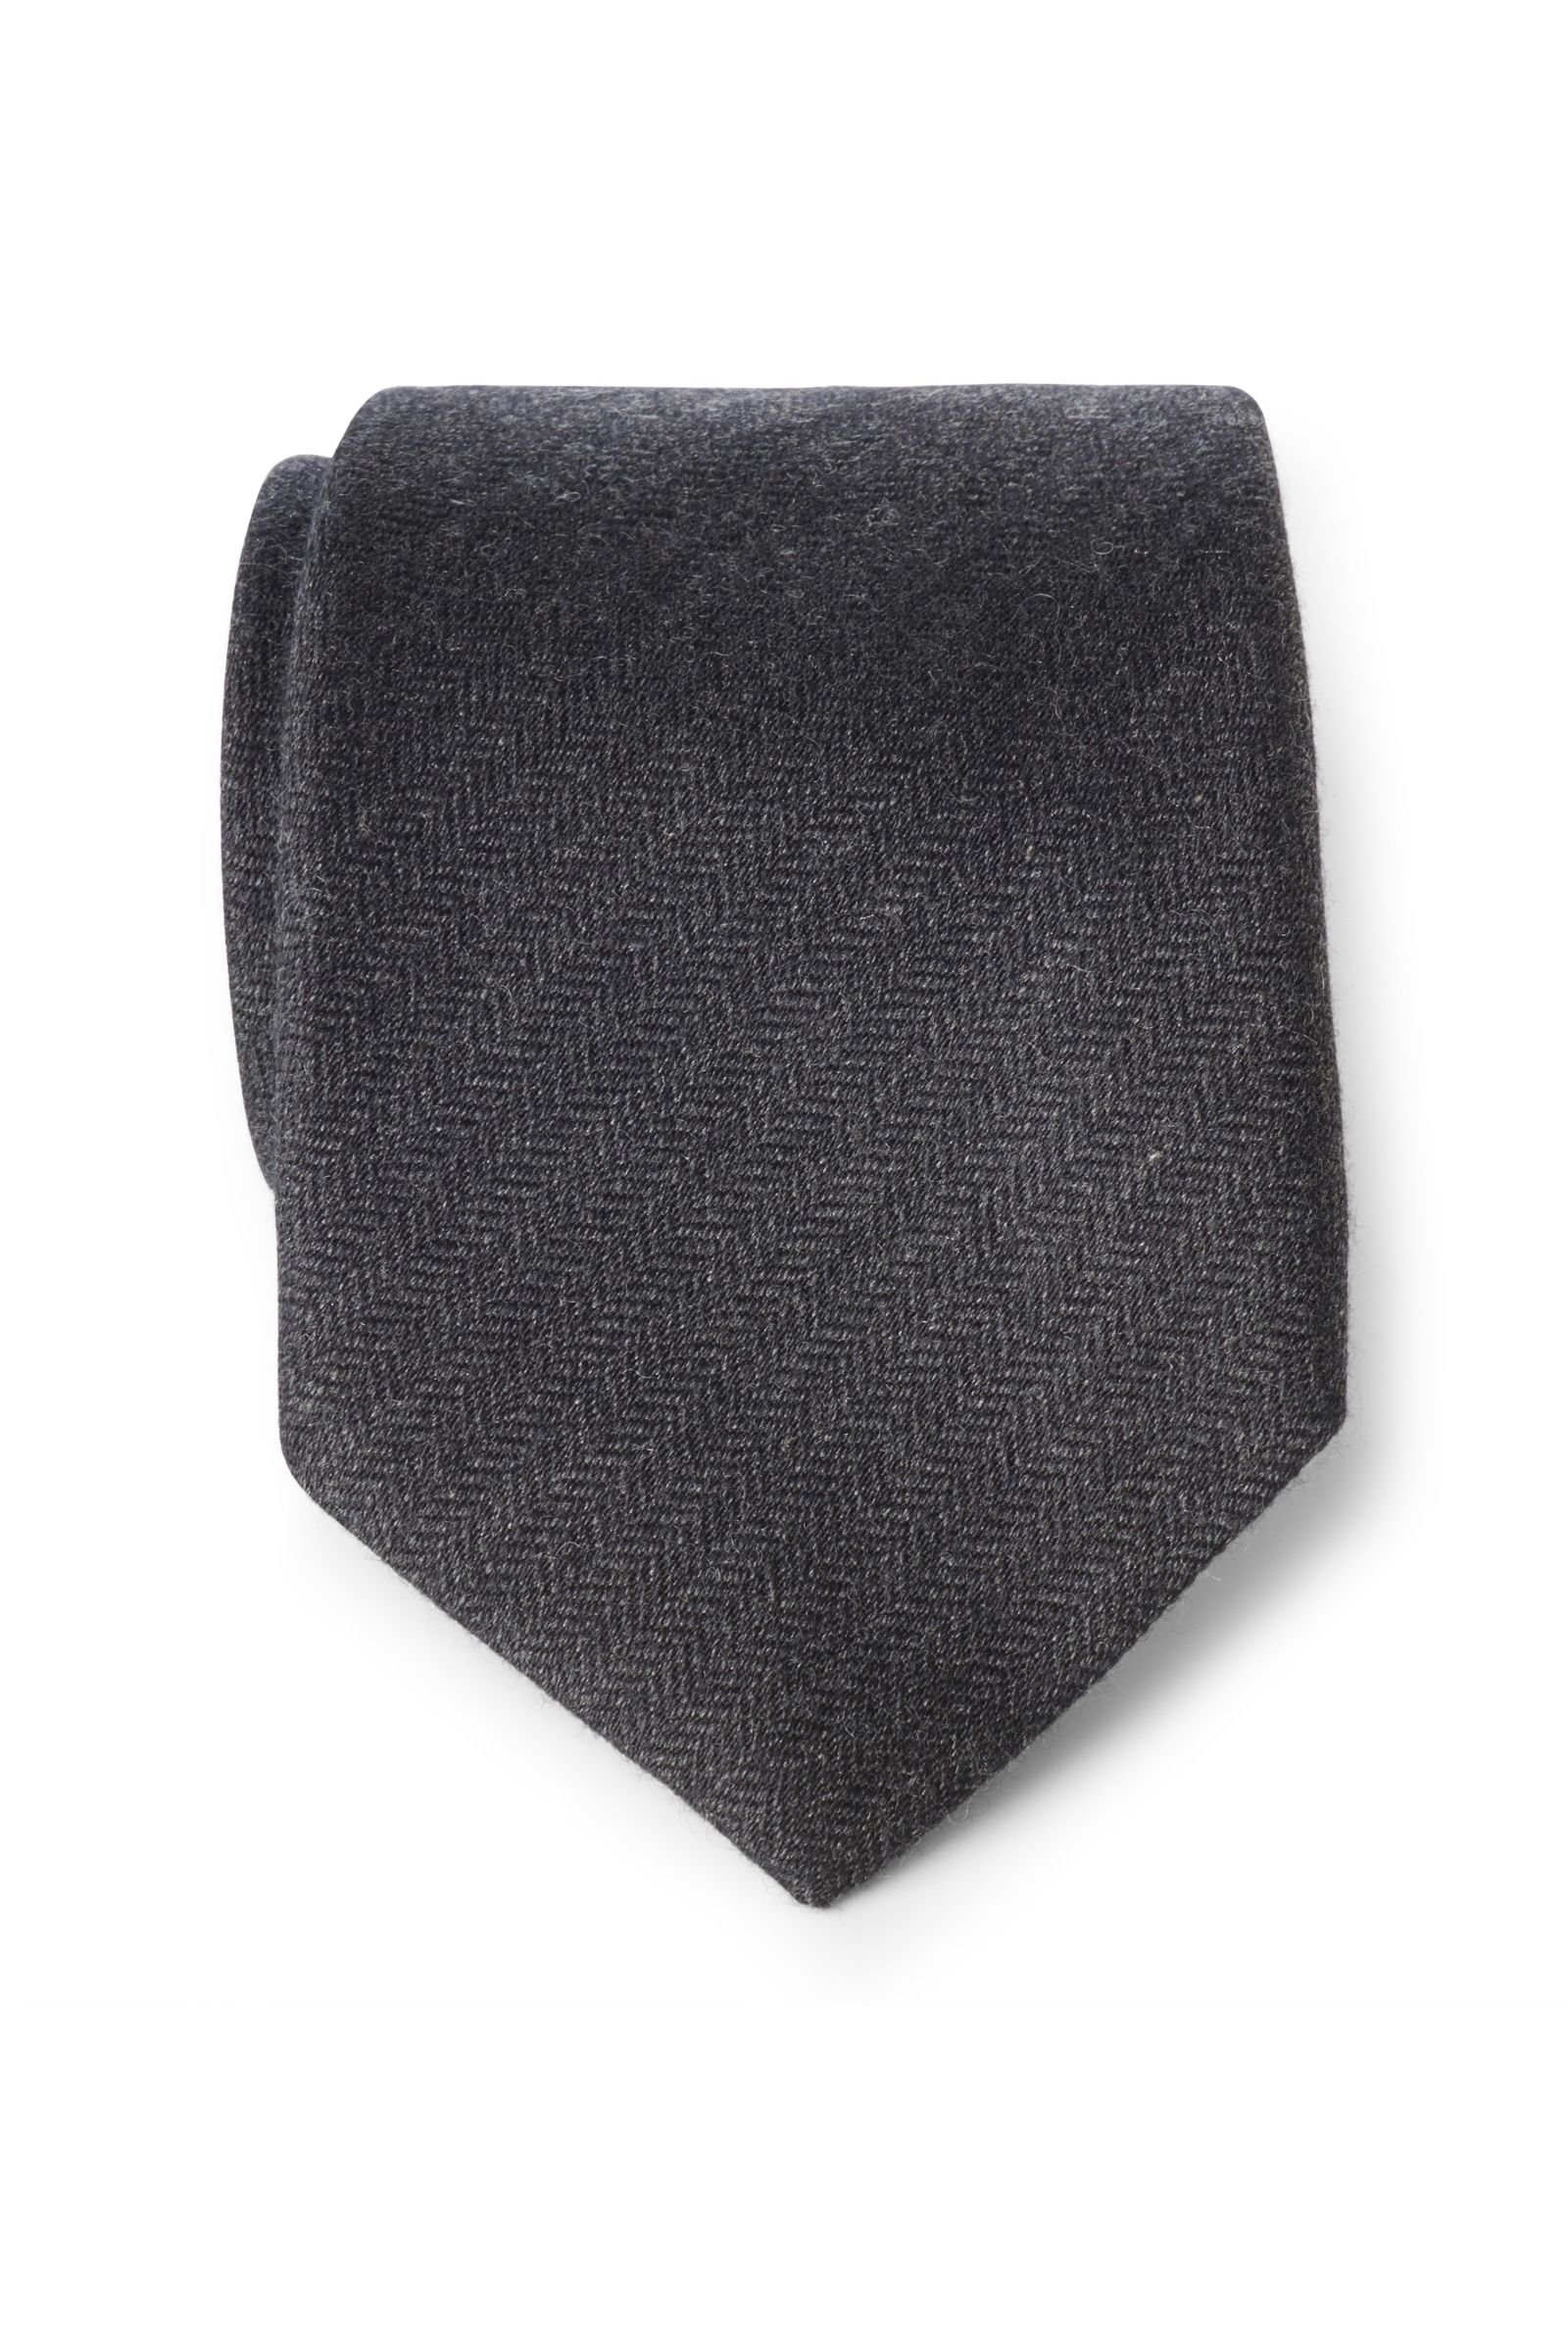 Tie dark grey